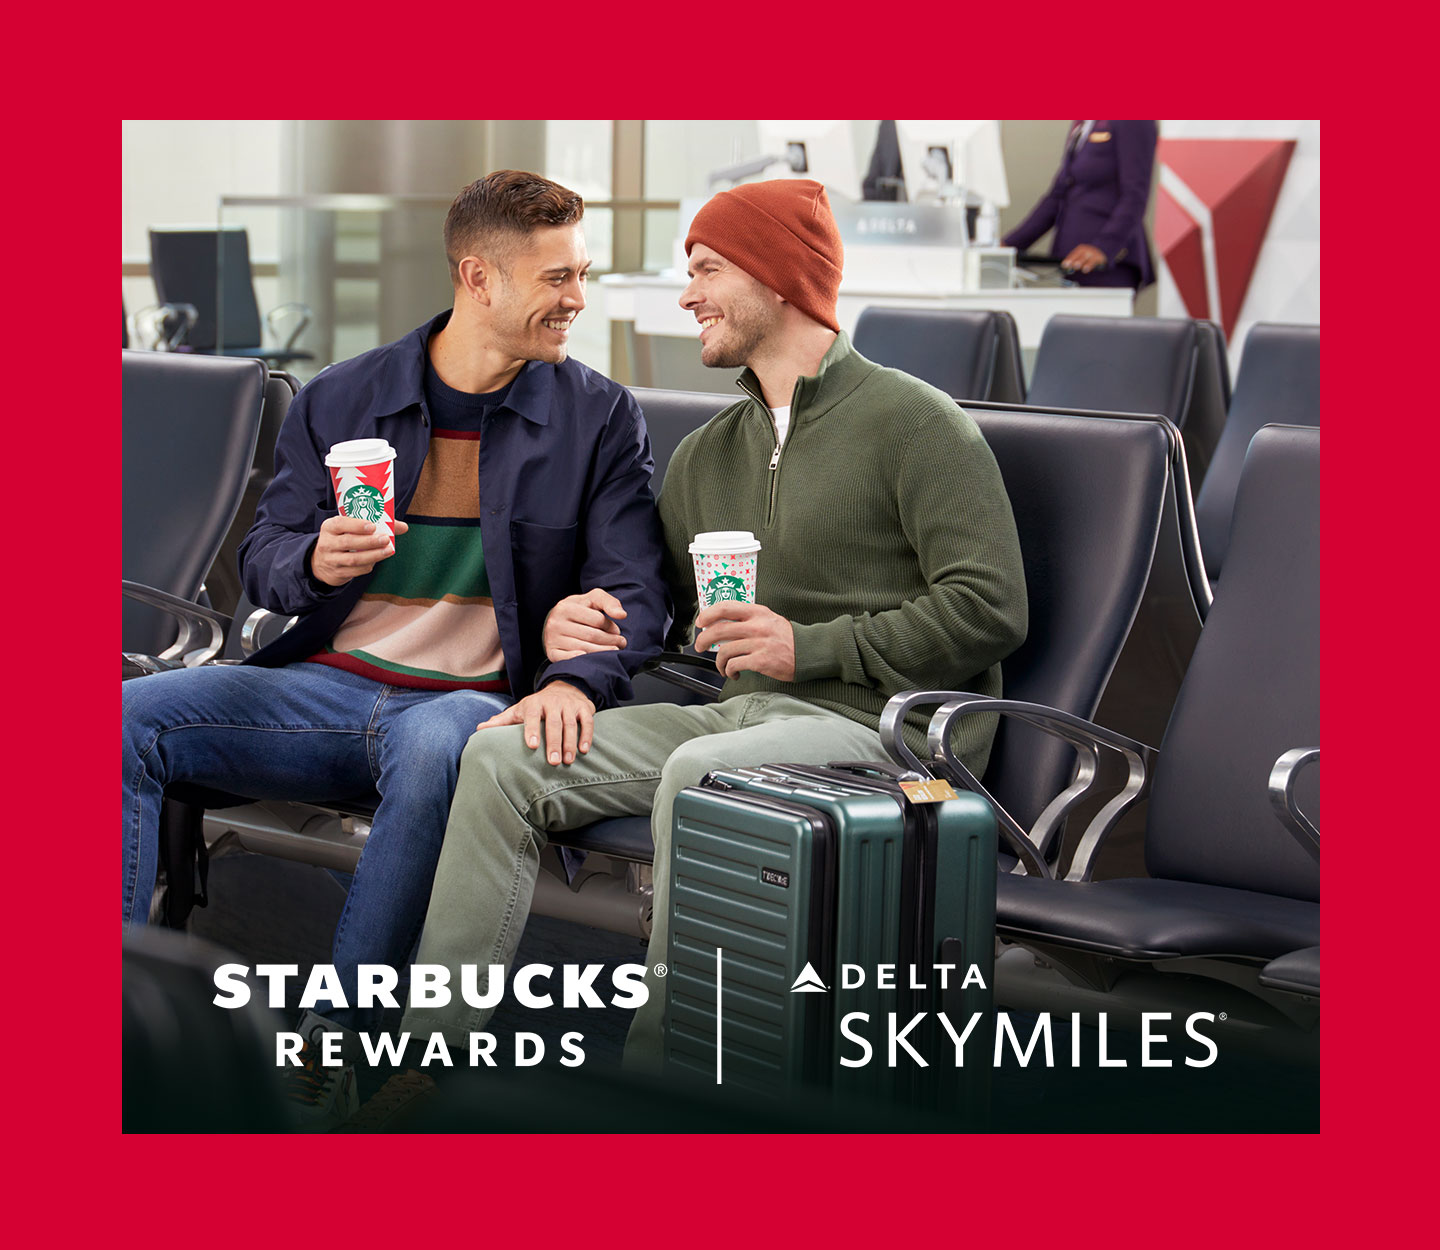 Couple at airport enjoying Starbucks drinks